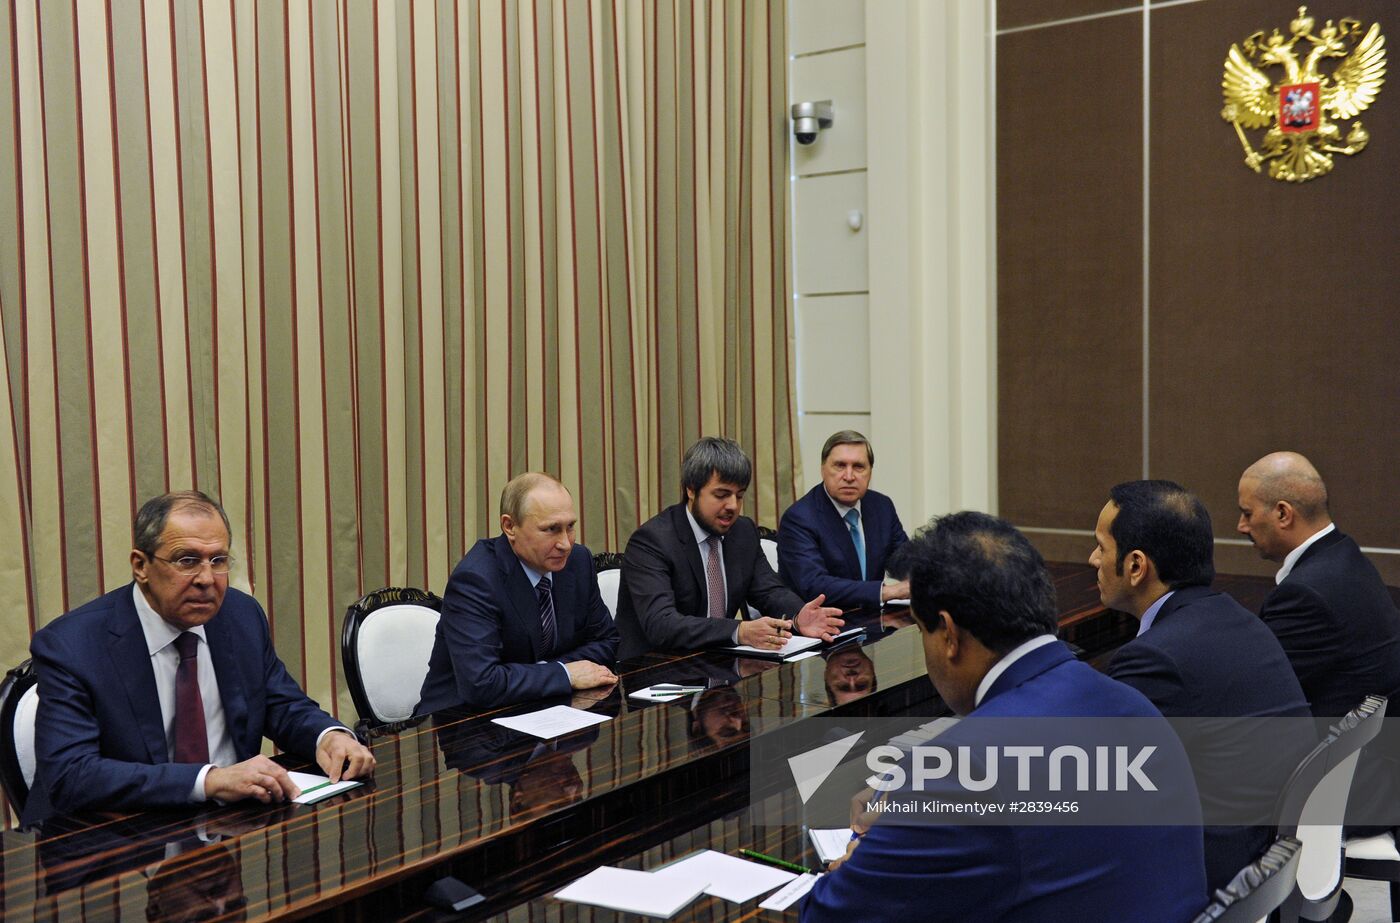 President Putin meets with Qatari Foreign Minister Al Thani